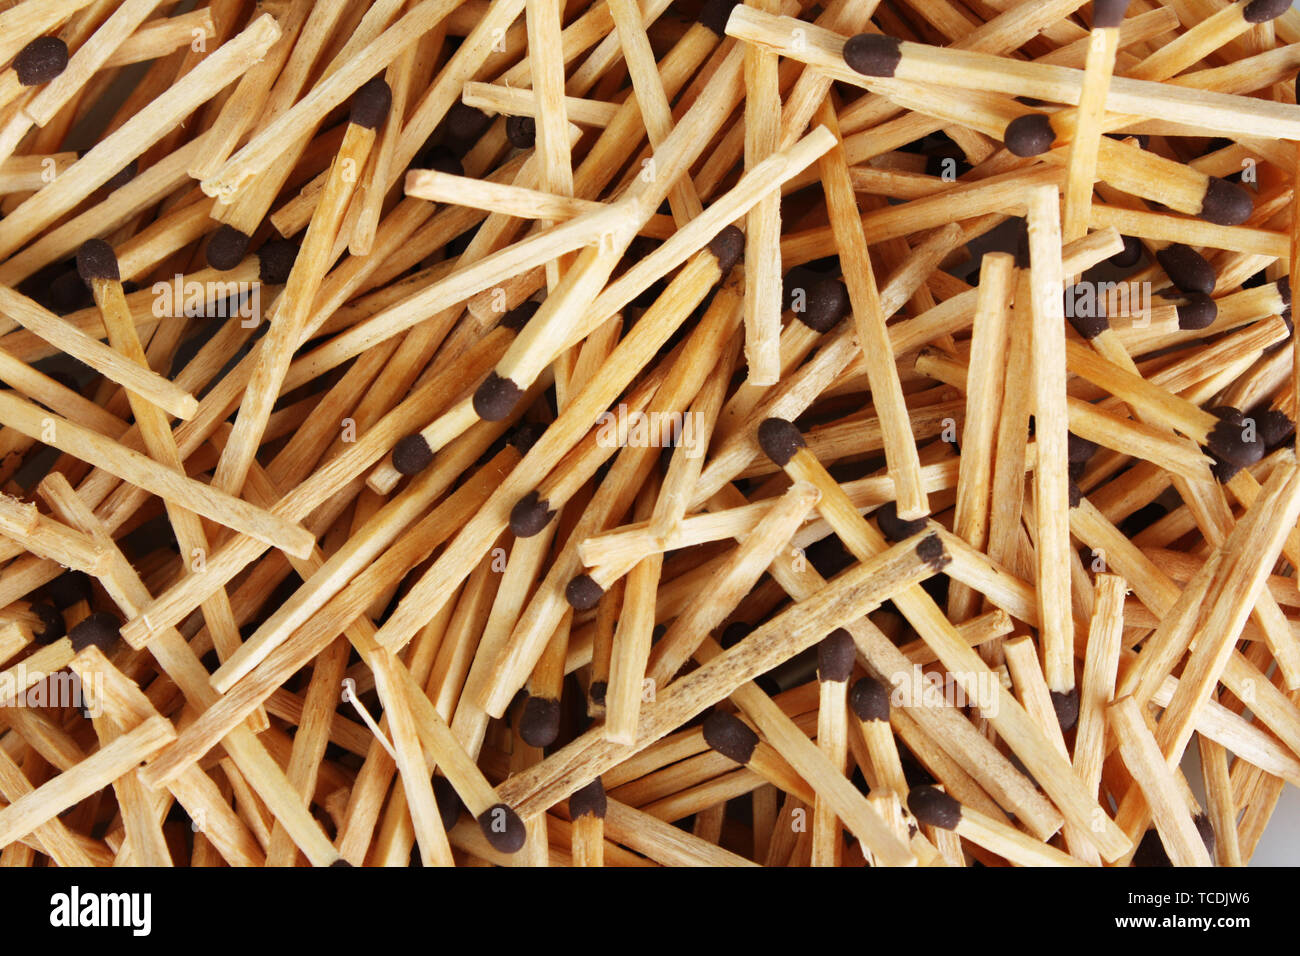 pile of matches closeup Stock Photo